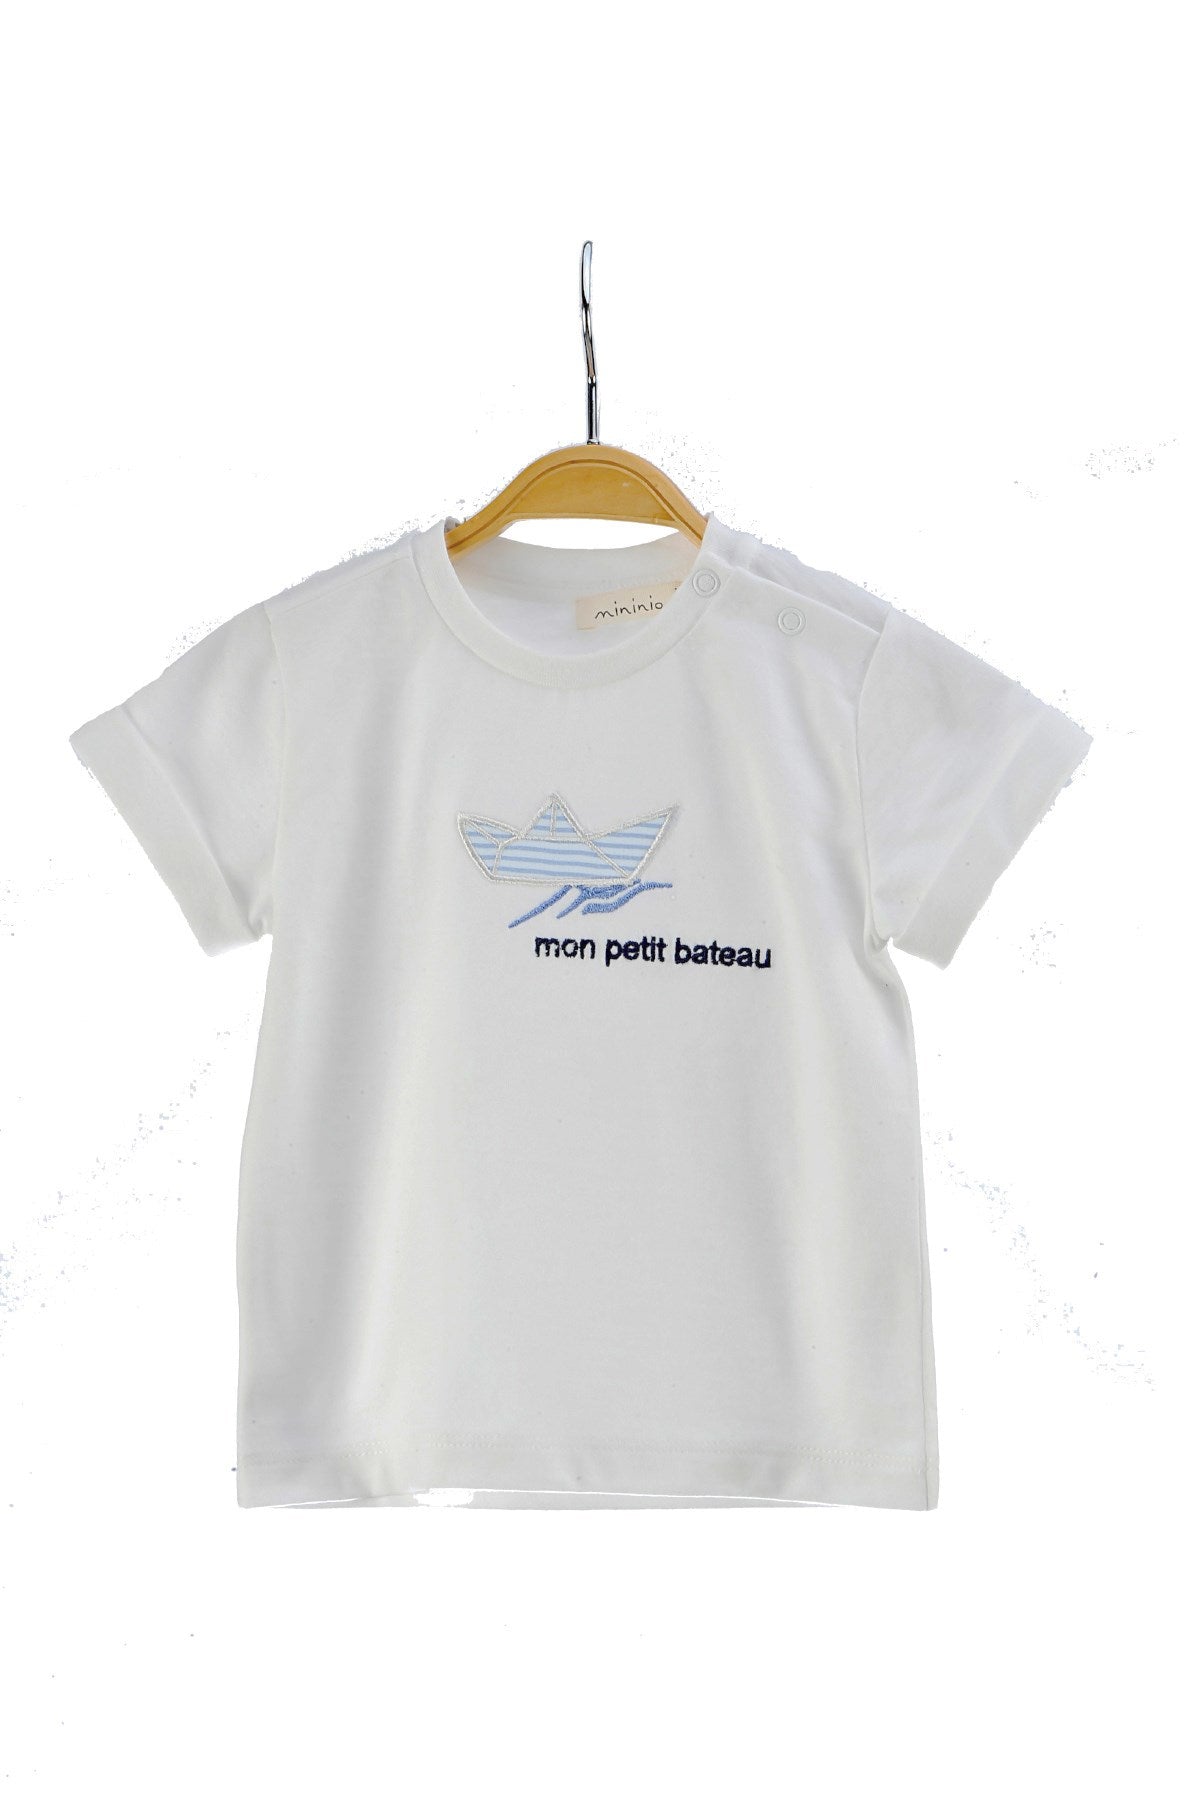 Erkek Bebek Beyaz Nakışlı T-Shirt (6ay-4yaş)-1